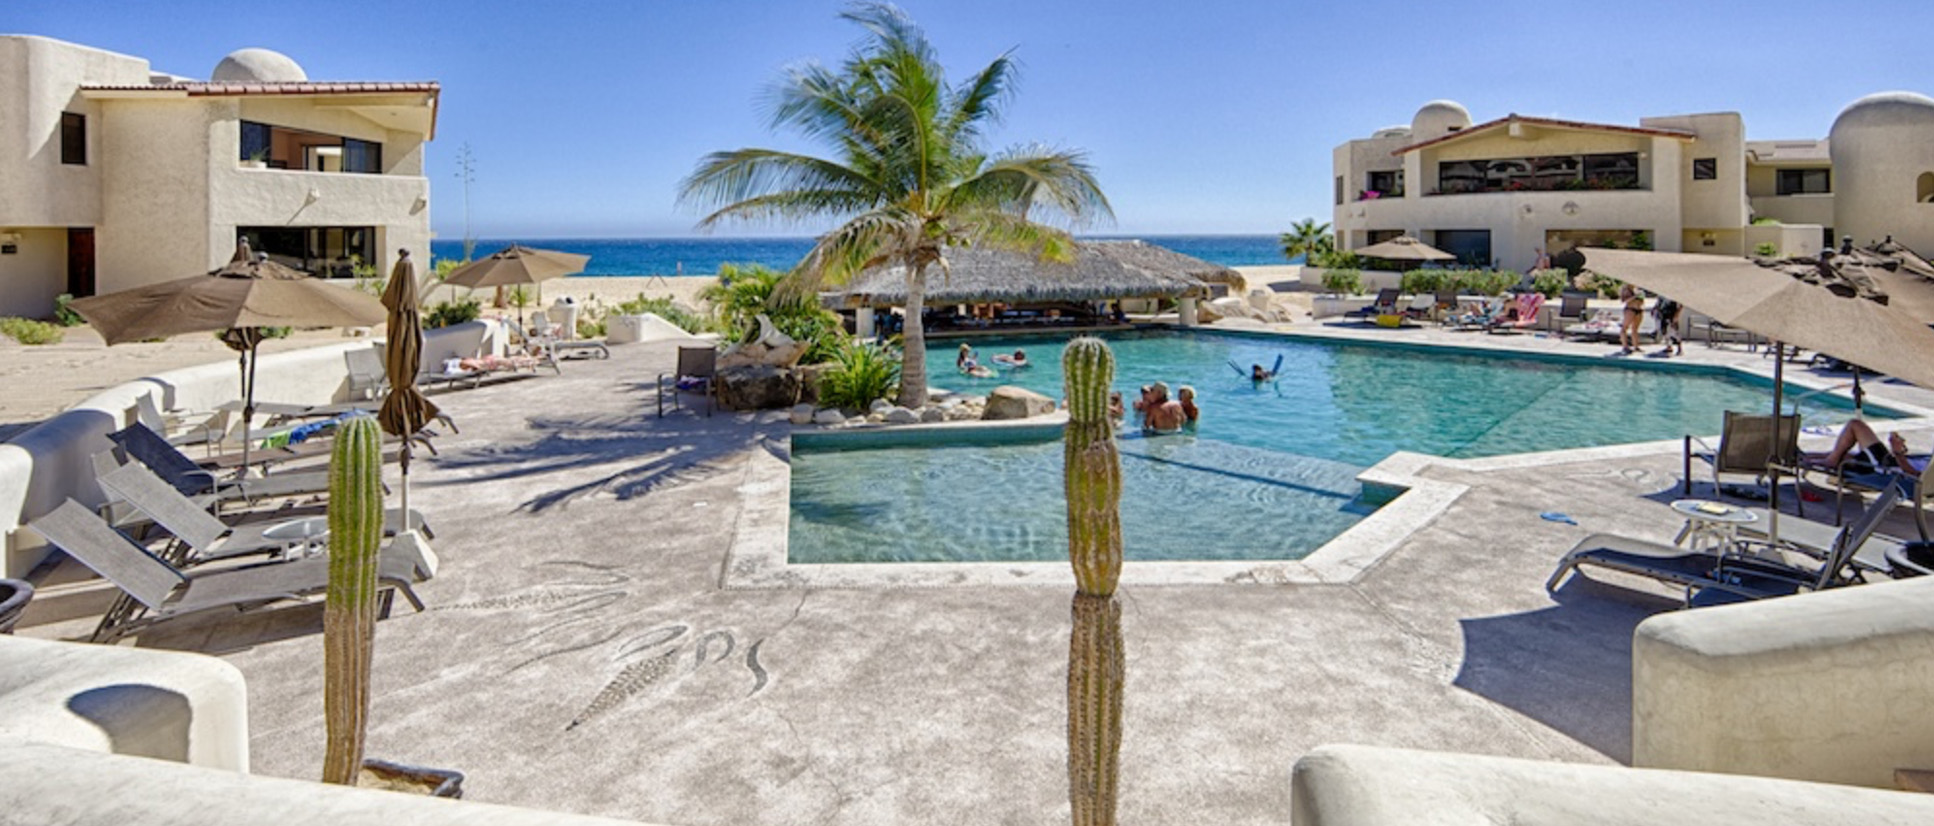 Terrasol Beach Resort Pool